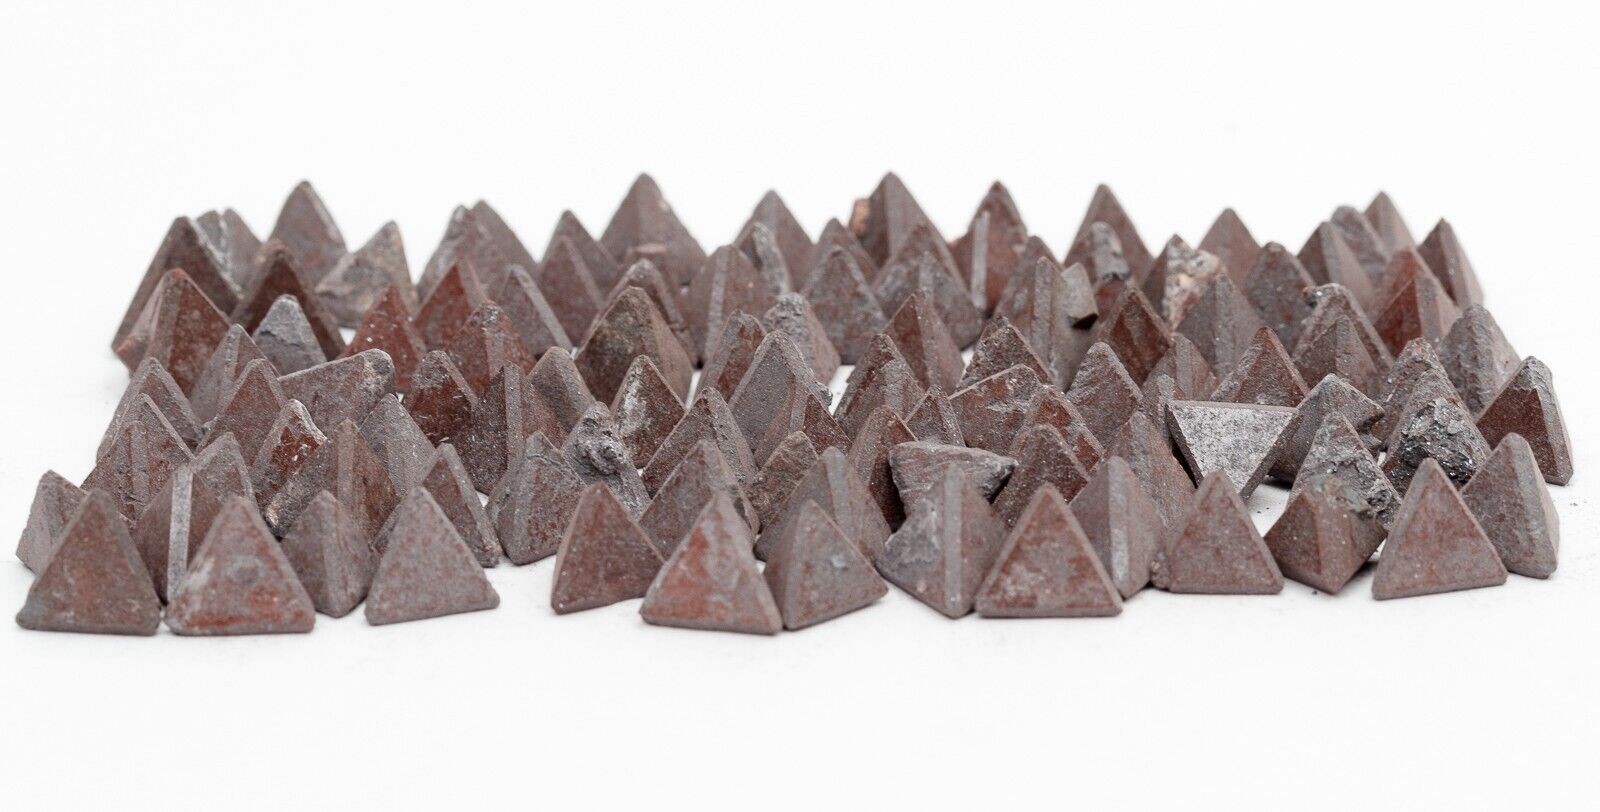 112x Rare Zunyite crystals 3.03 oz untreated stone wholesale specimen #8225T